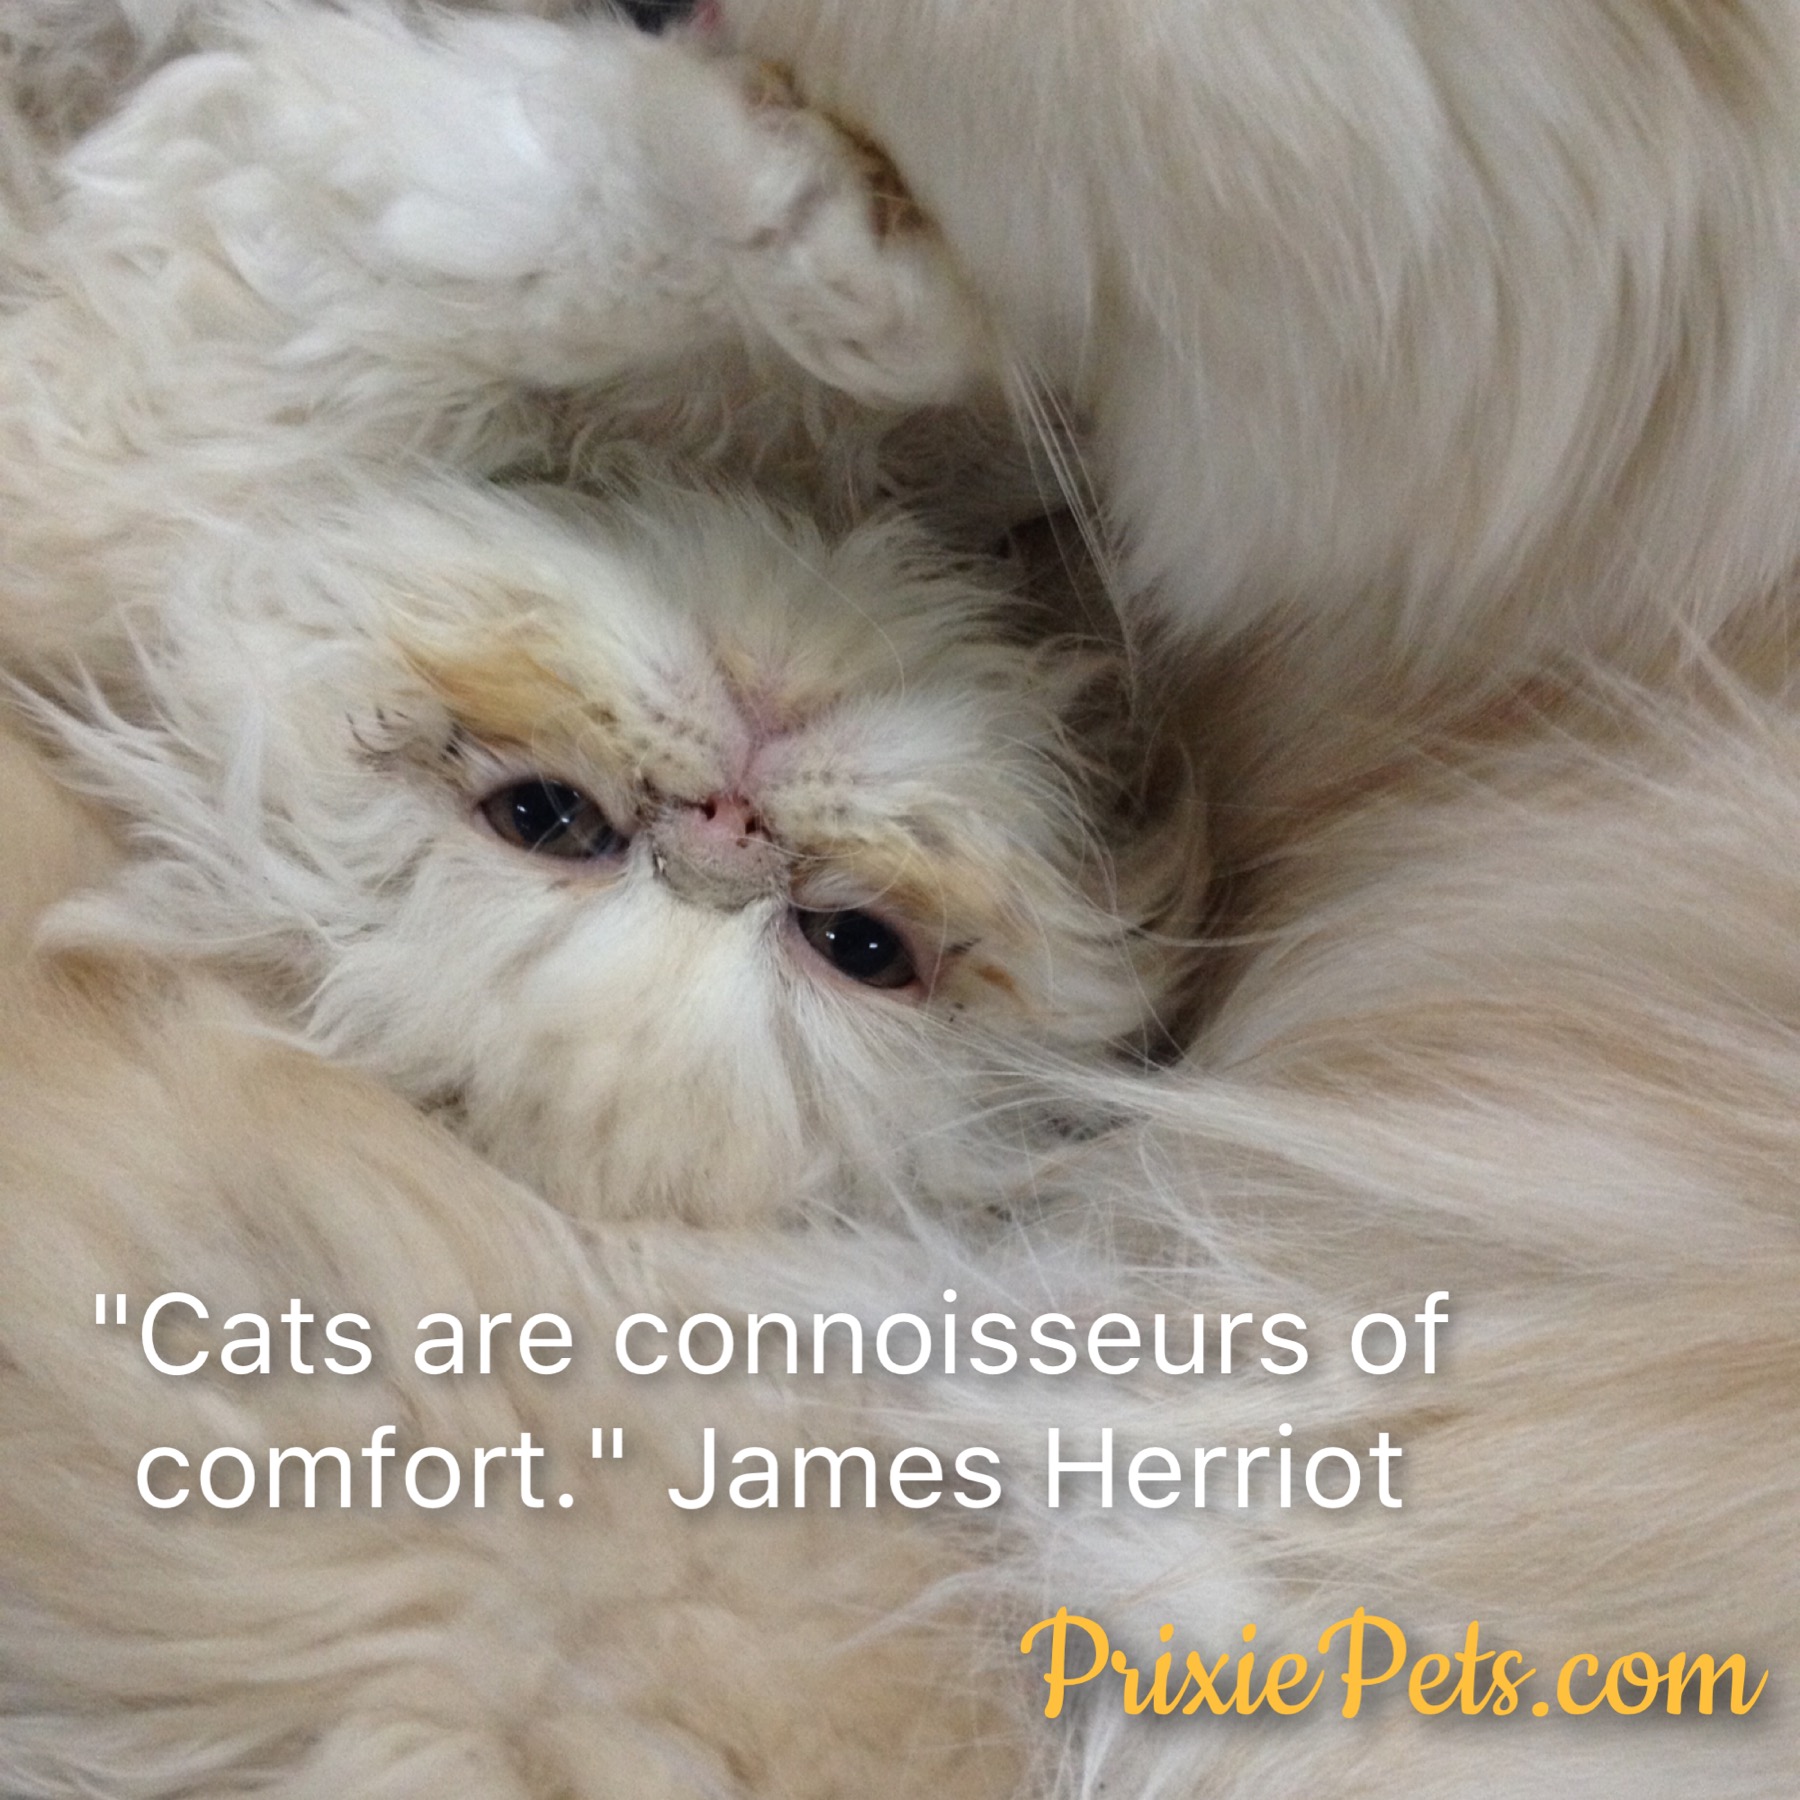 Our Favorite Cat Quotes!